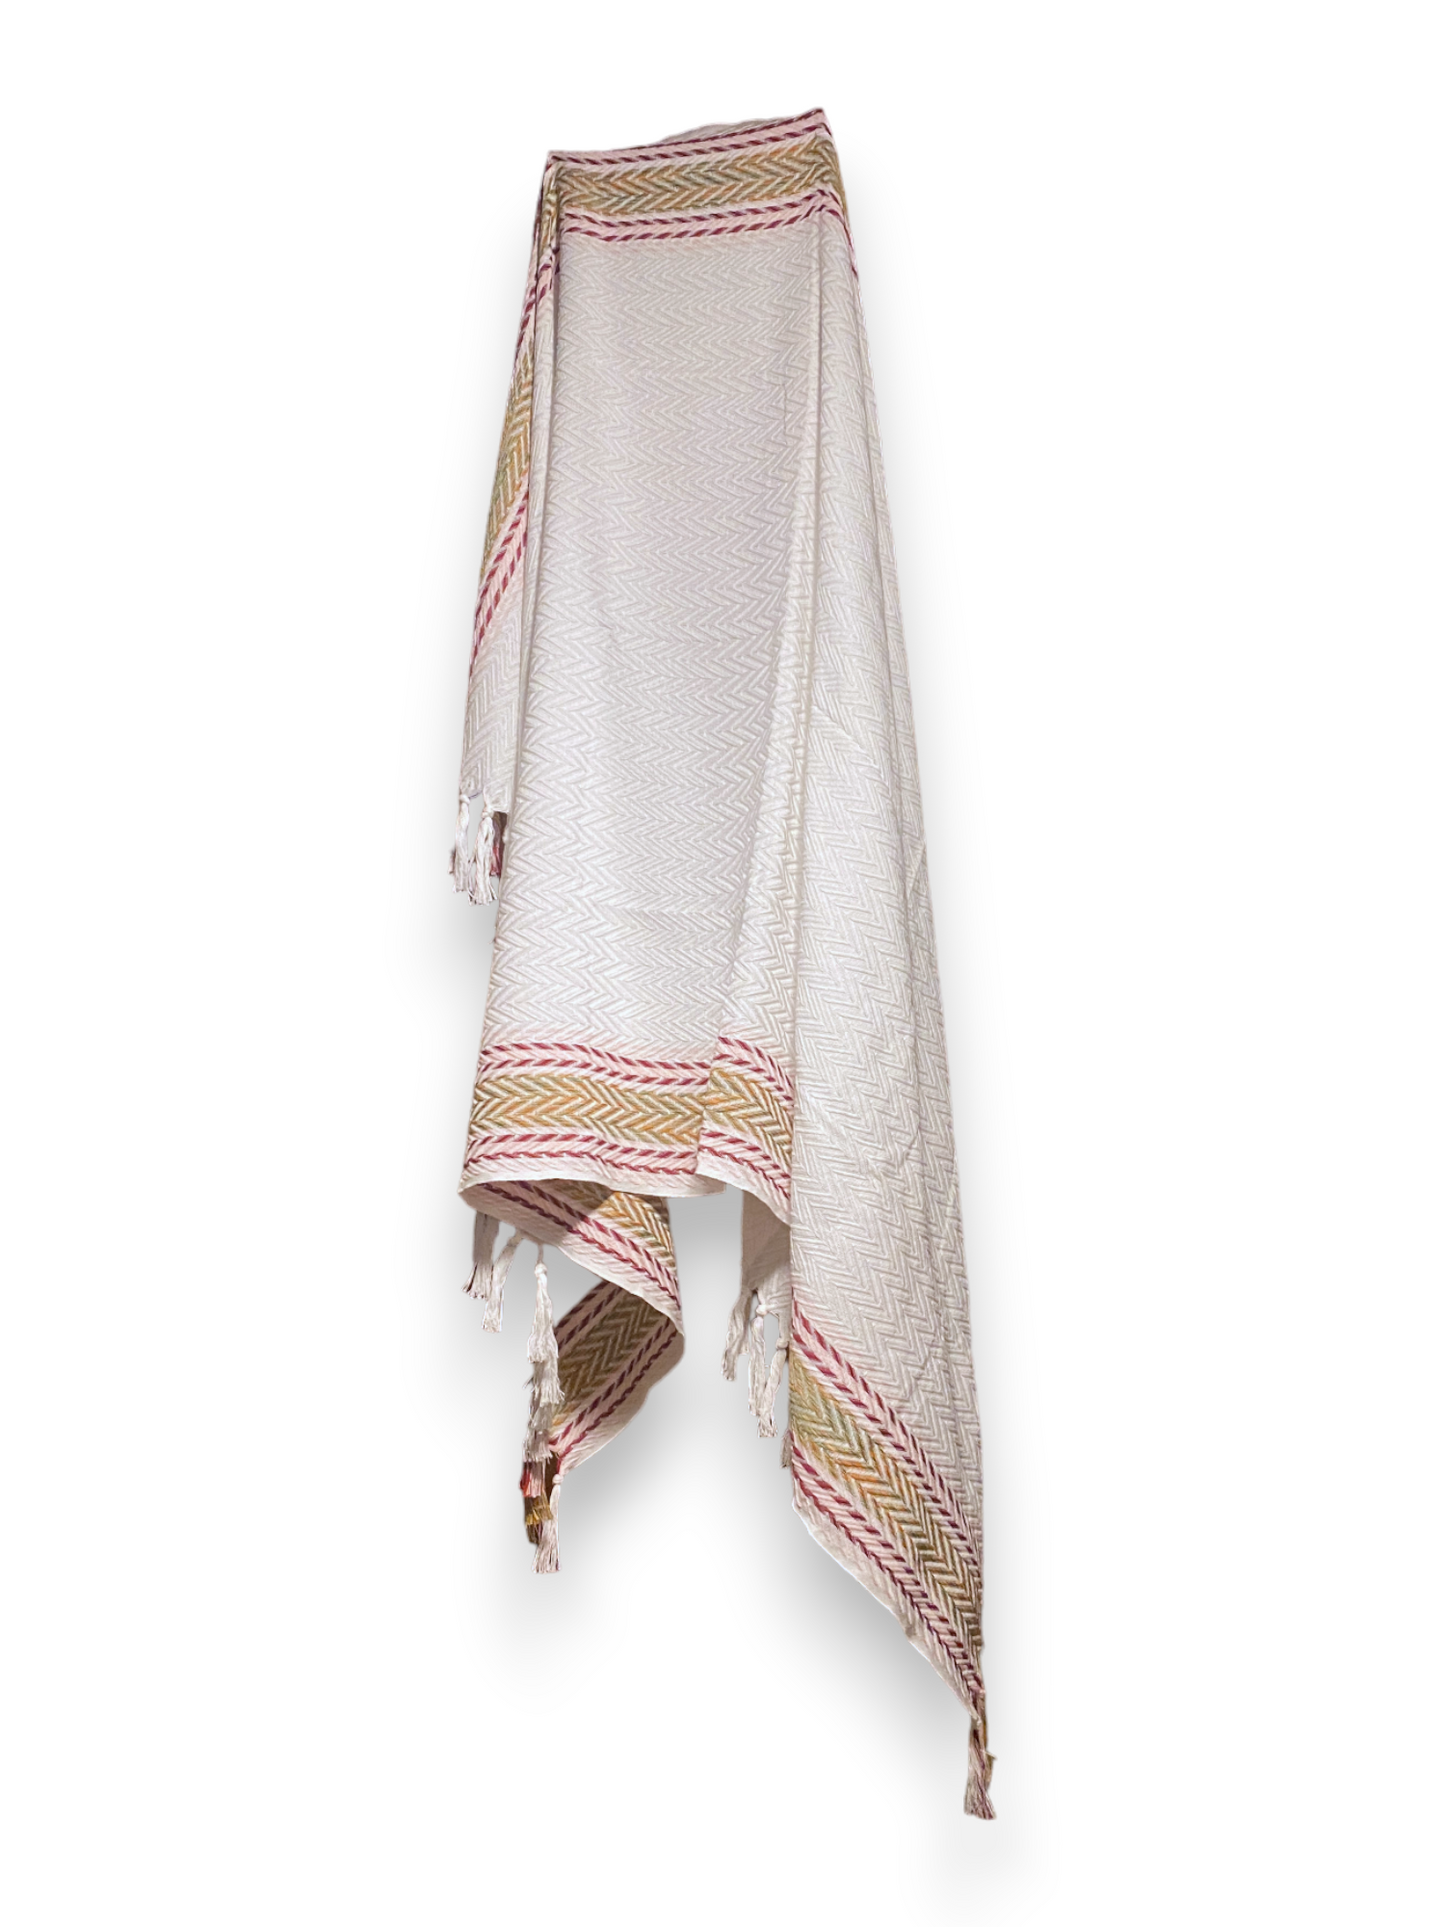 Hammam Towel (Cotton)